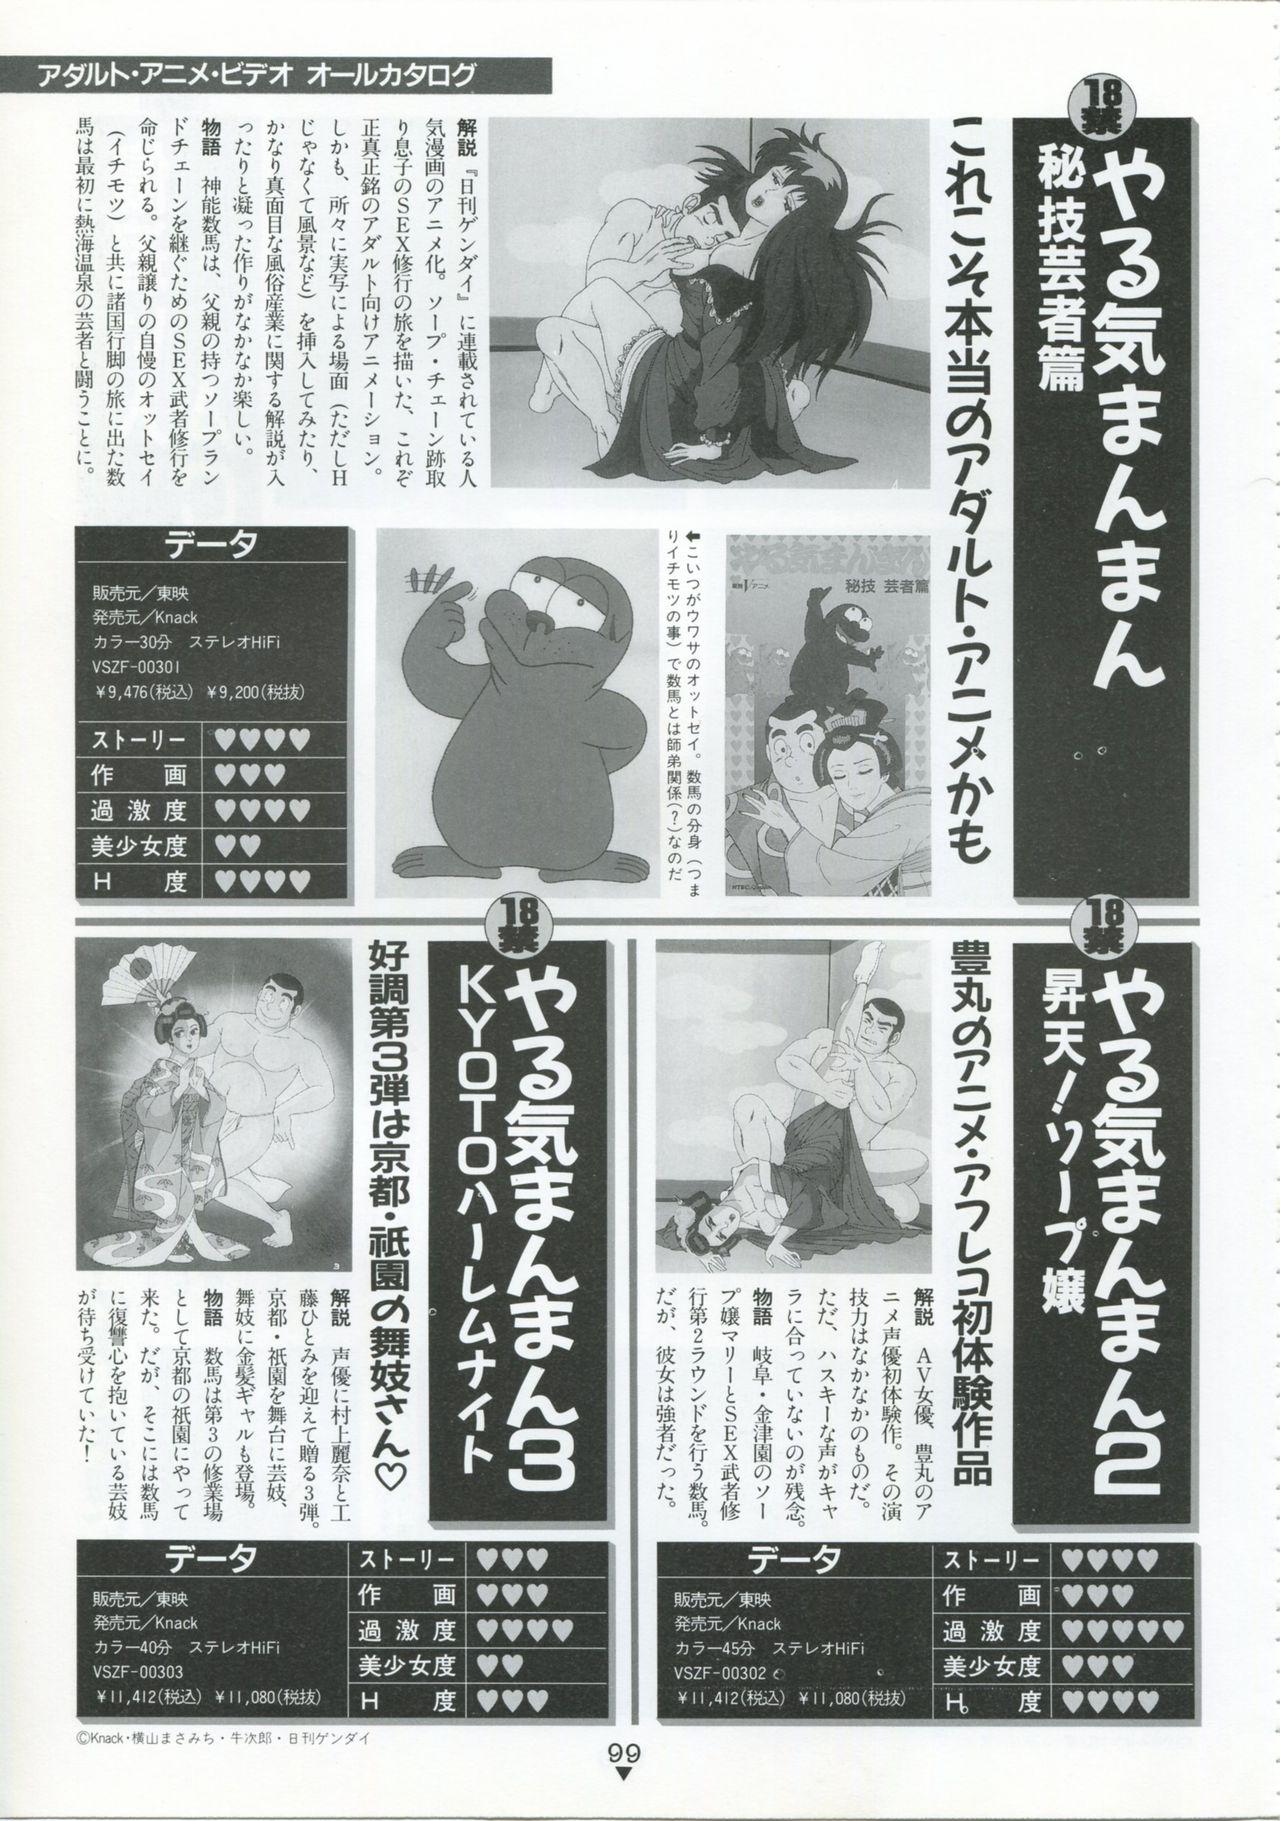 Bishoujo Anime Daizenshuu - Adult Animation Video Catalog 1991 94